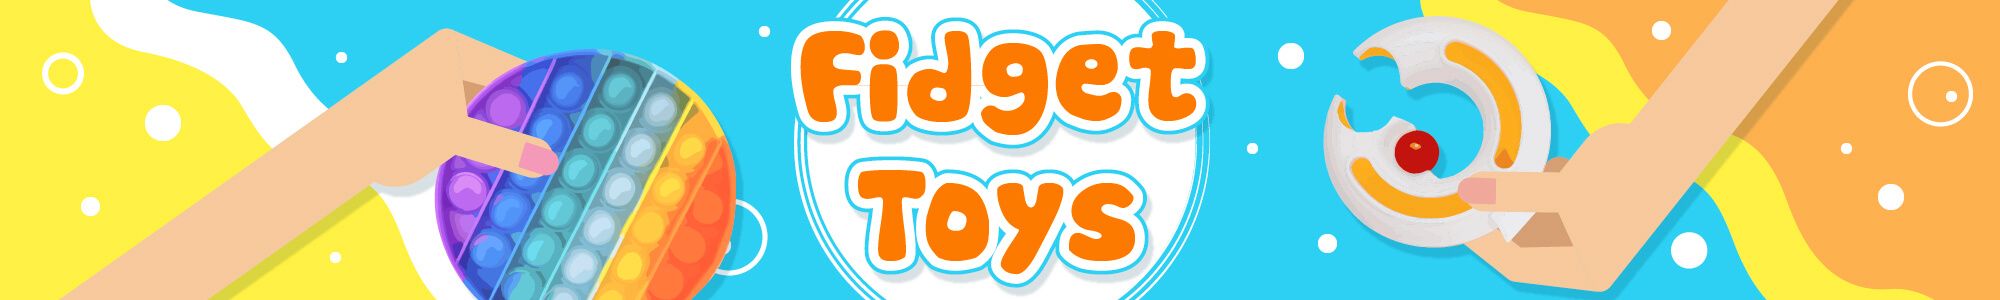 Fidget toys_page banner_2000x300px - Copy.jpg